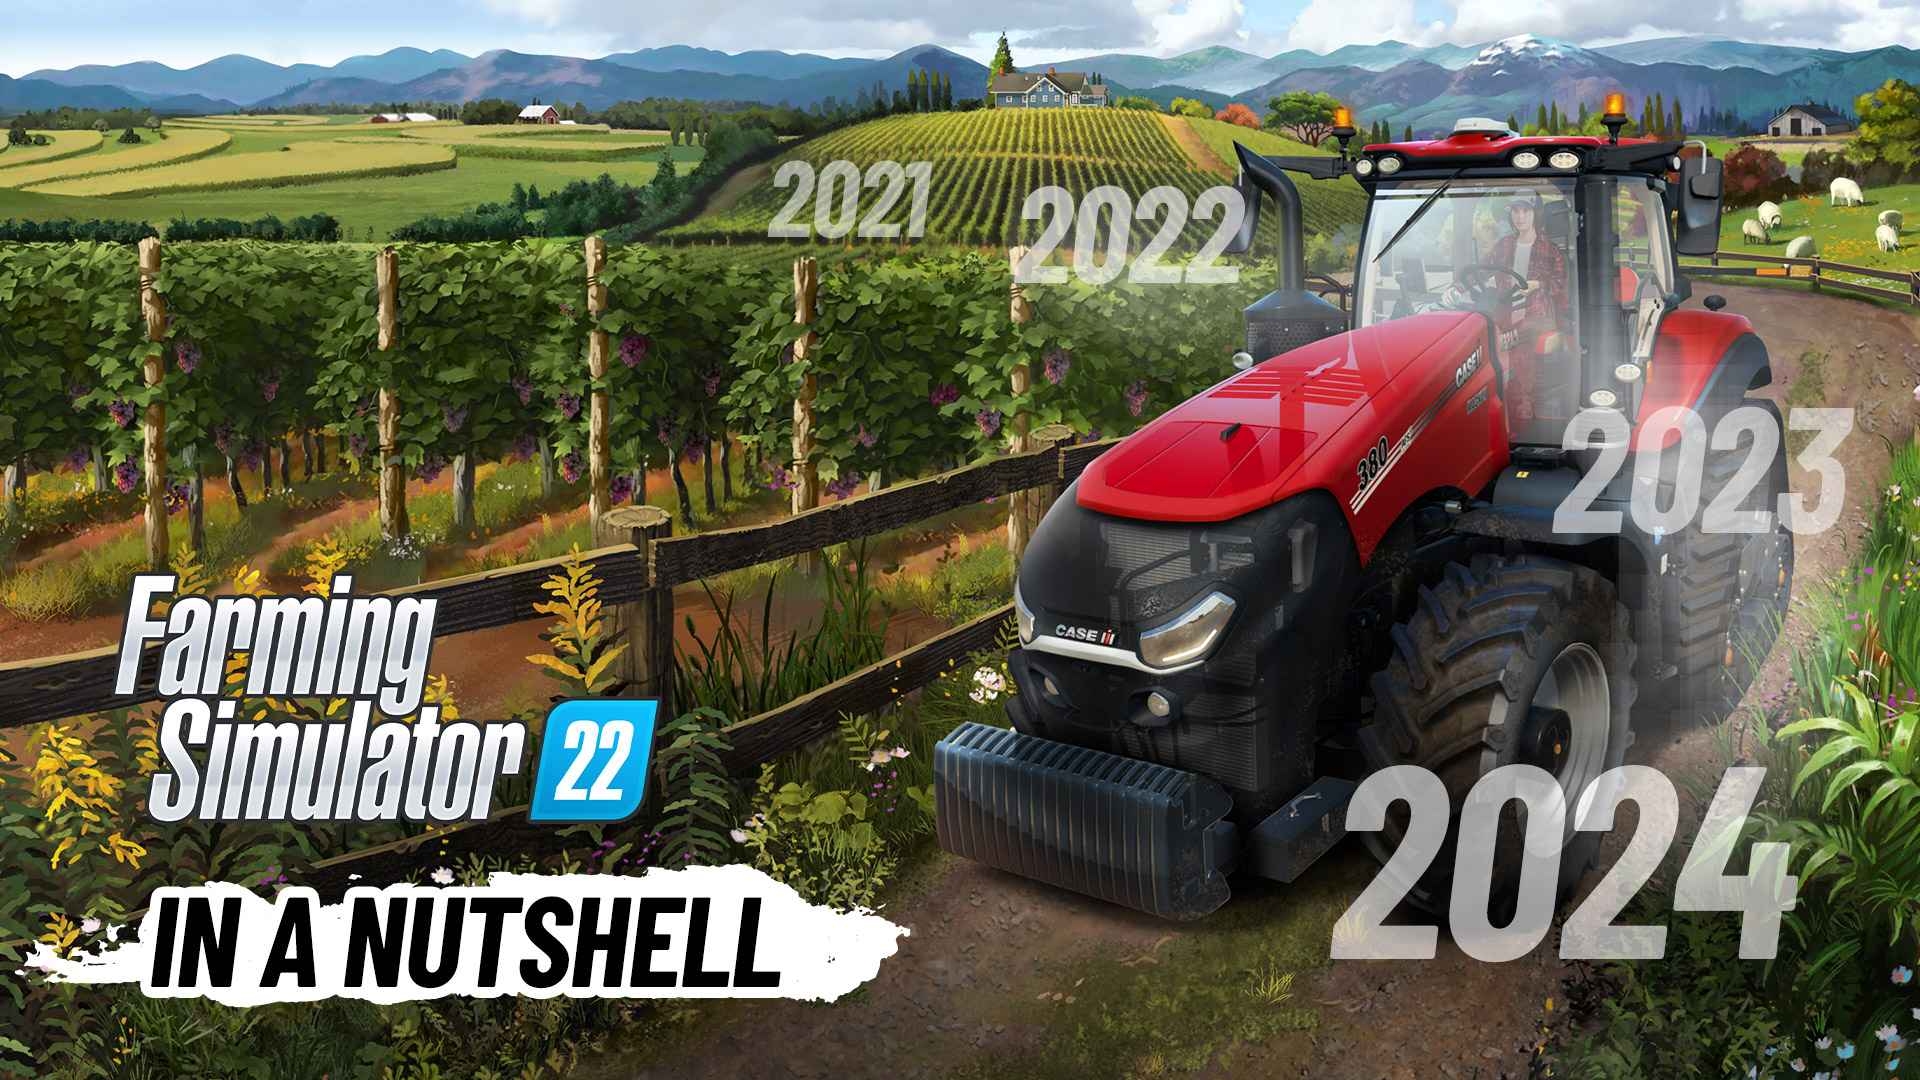 Farming Simulator 22 Counts 1.6 Billion Mod Downloads in 30 Months